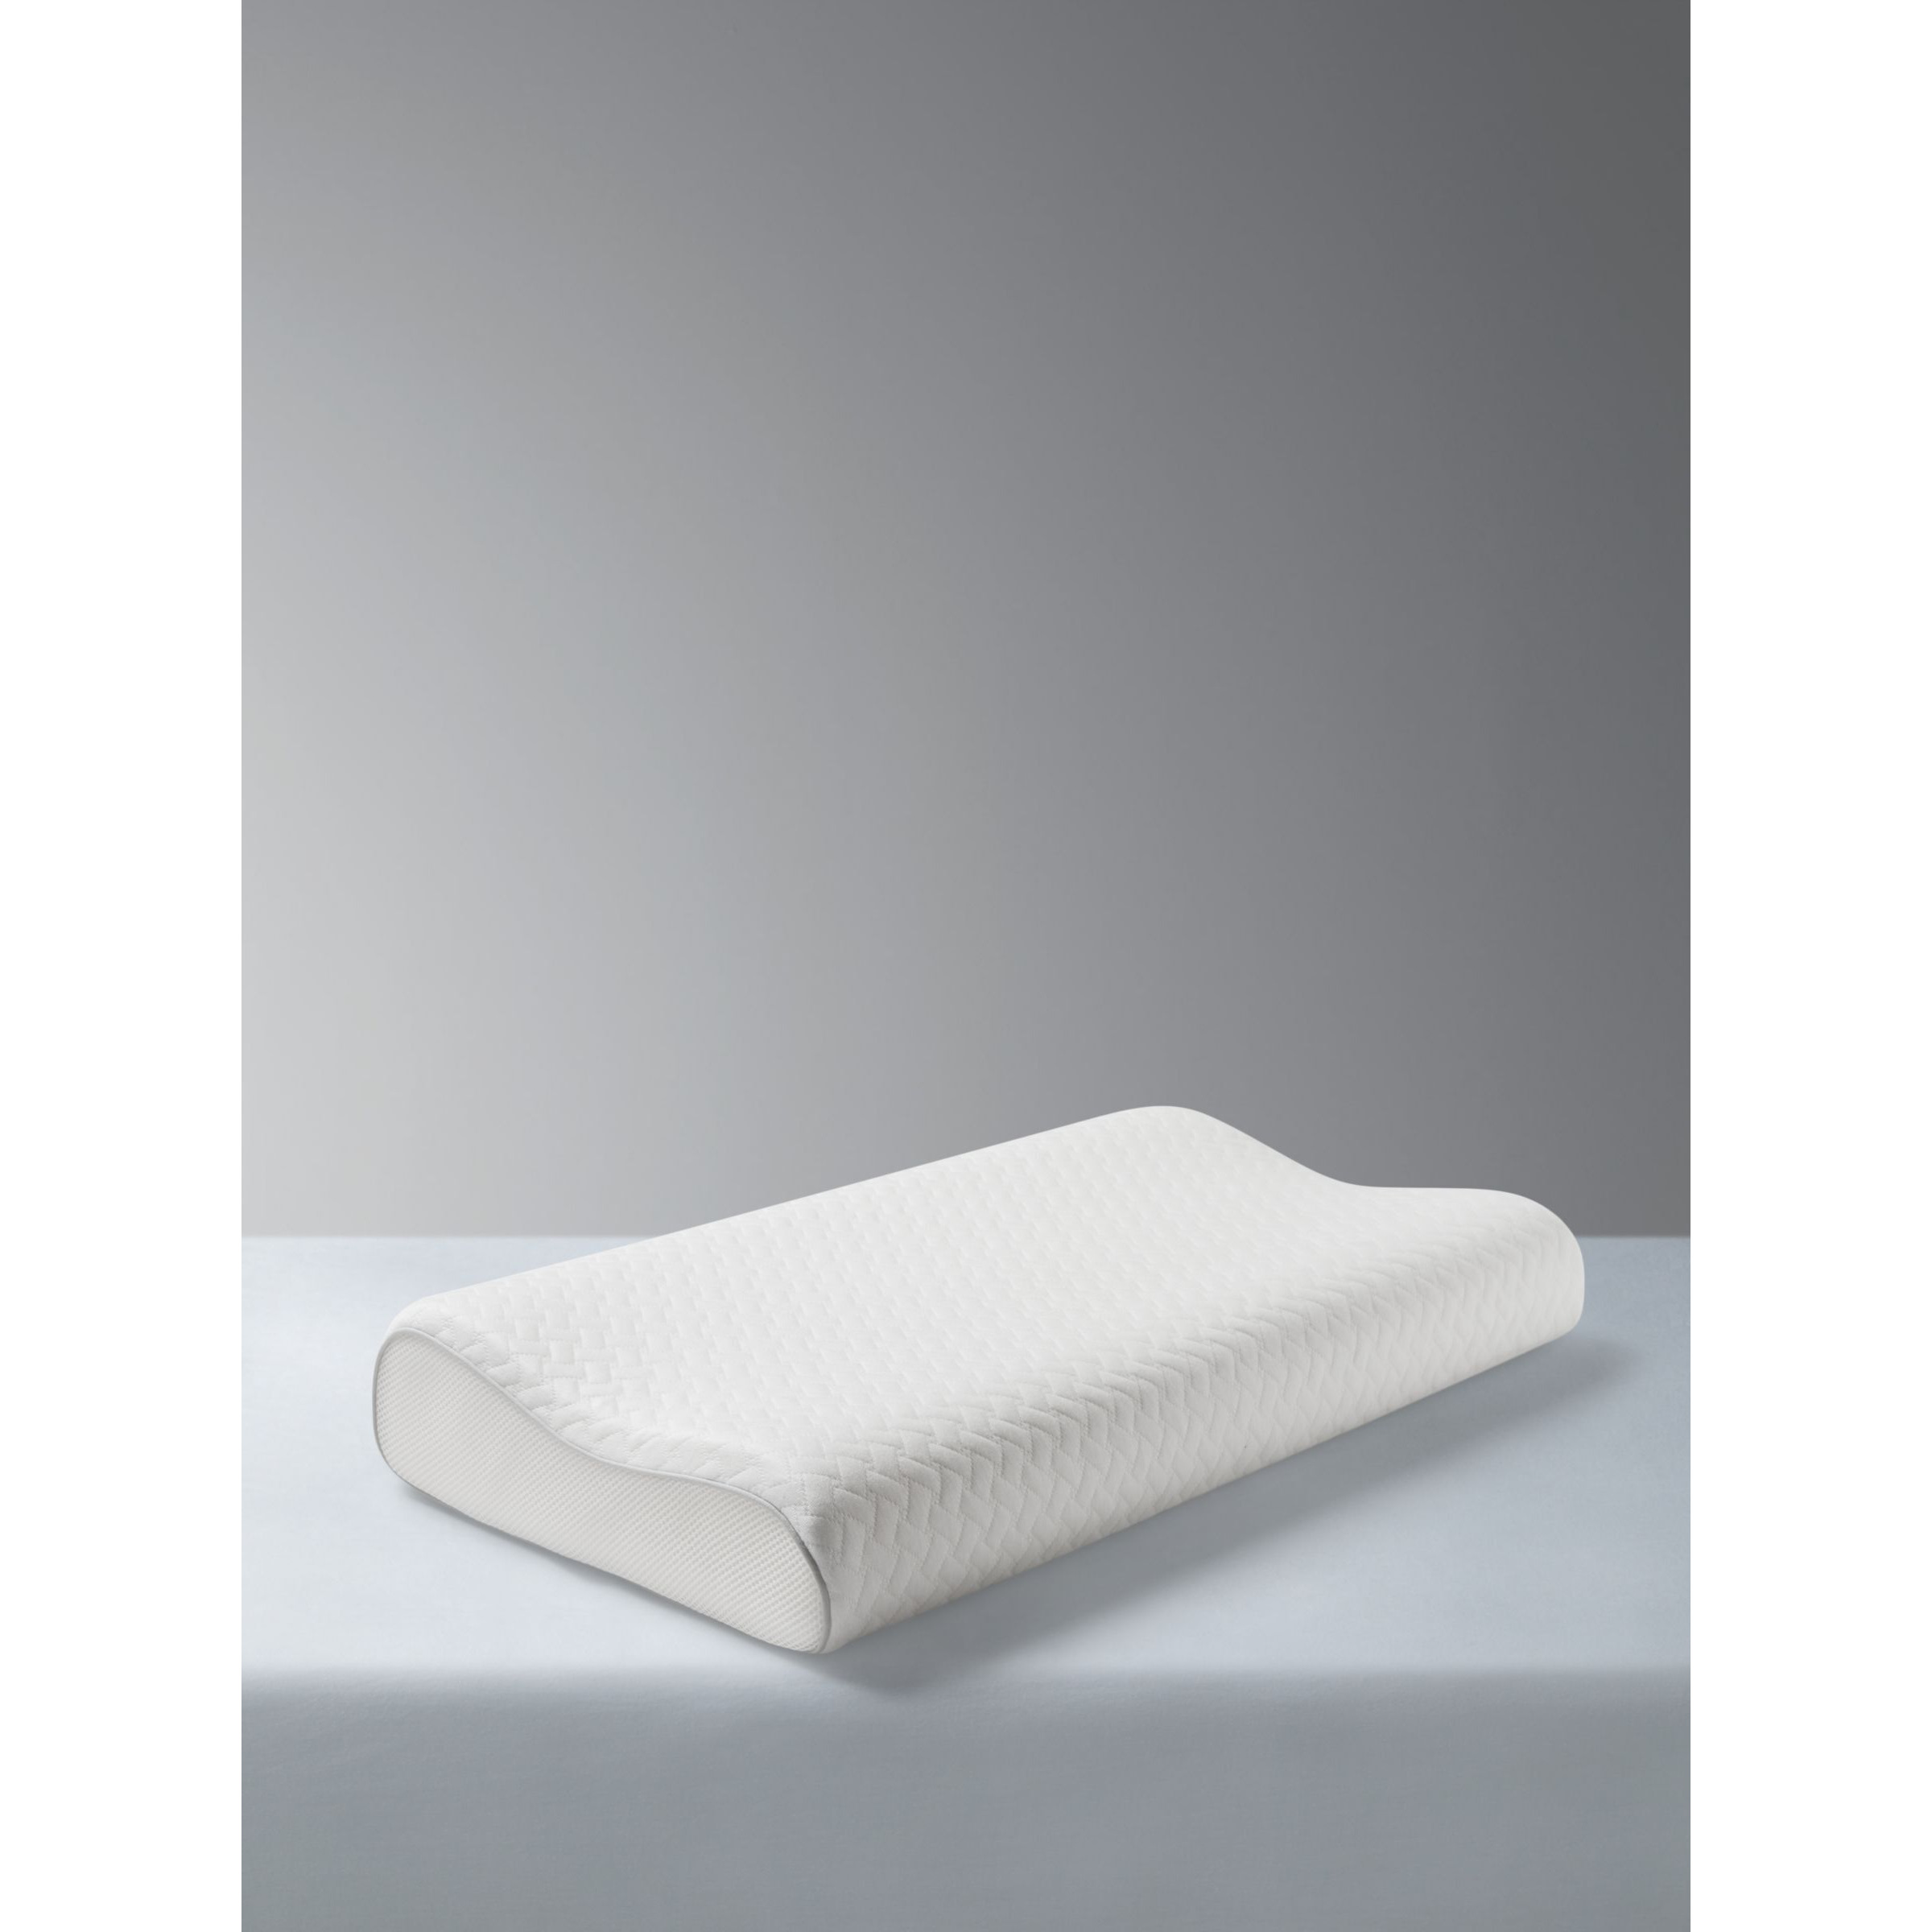 John Lewis Specialist Support 2-Way Memory Foam Standard Pillow, Medium/Firm - image 1